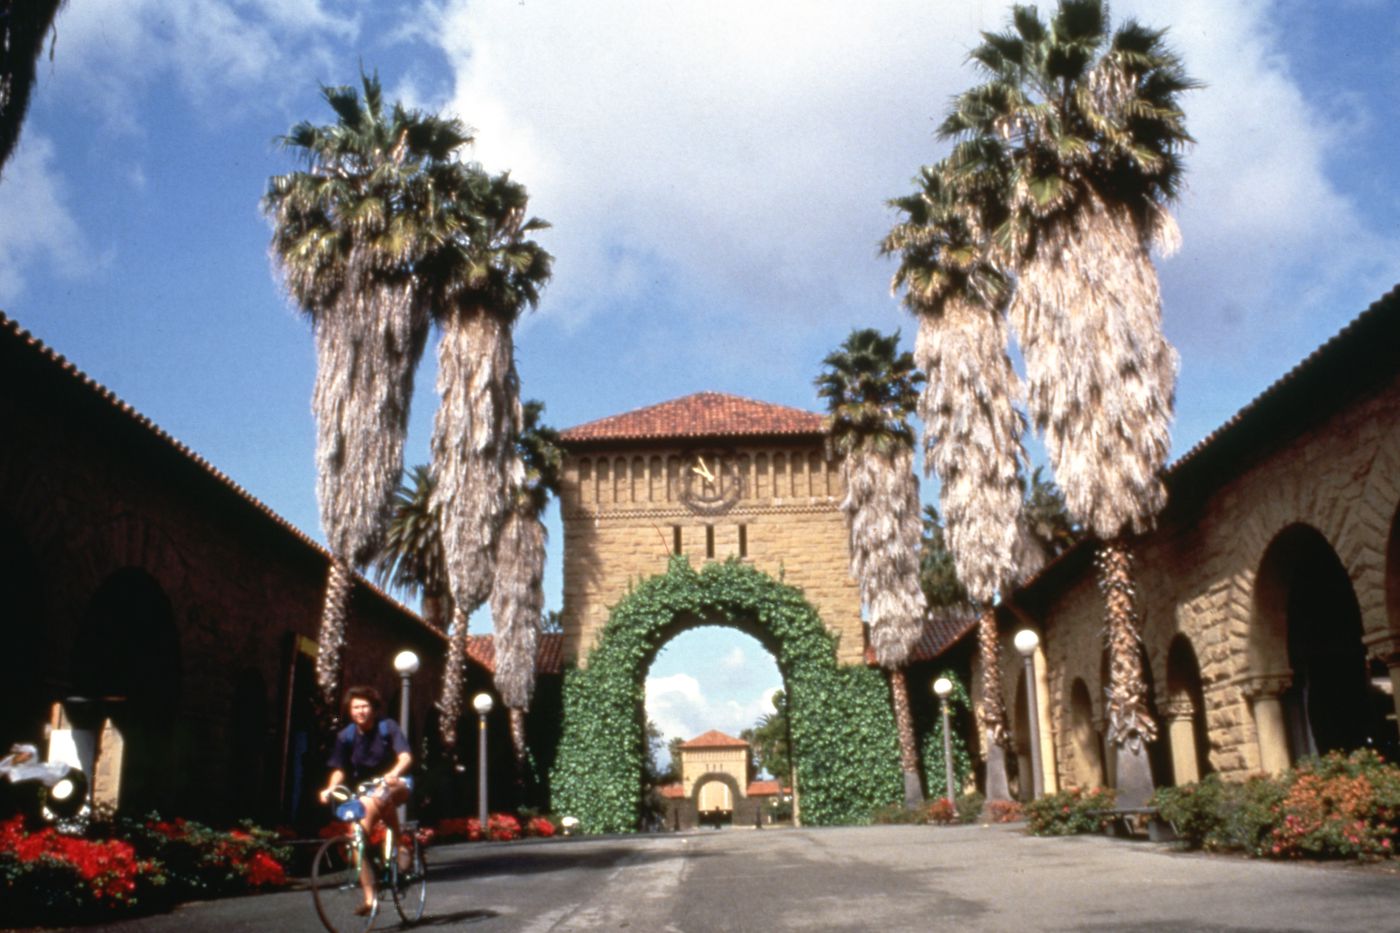 Photograph of Stanford for research for Olmsted: L'origine del parco urbano e del parco naturale contemporaneo